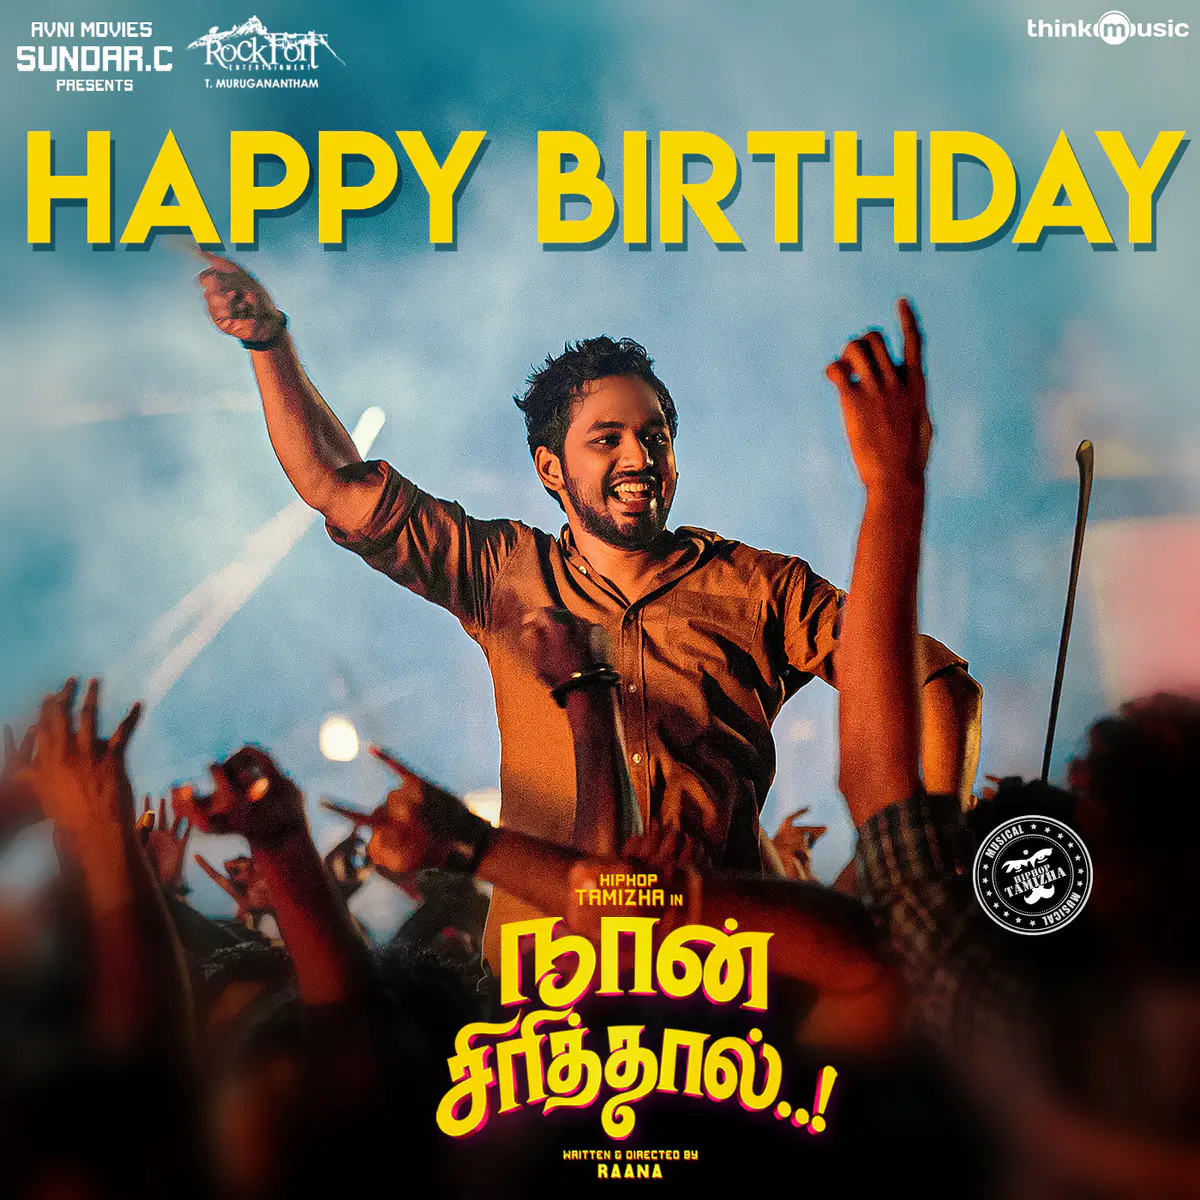 Happy Birthday Lyrics In Tamil Naan Sirithal Happy Birthday Song Lyrics In English Free Online On Gaana Com